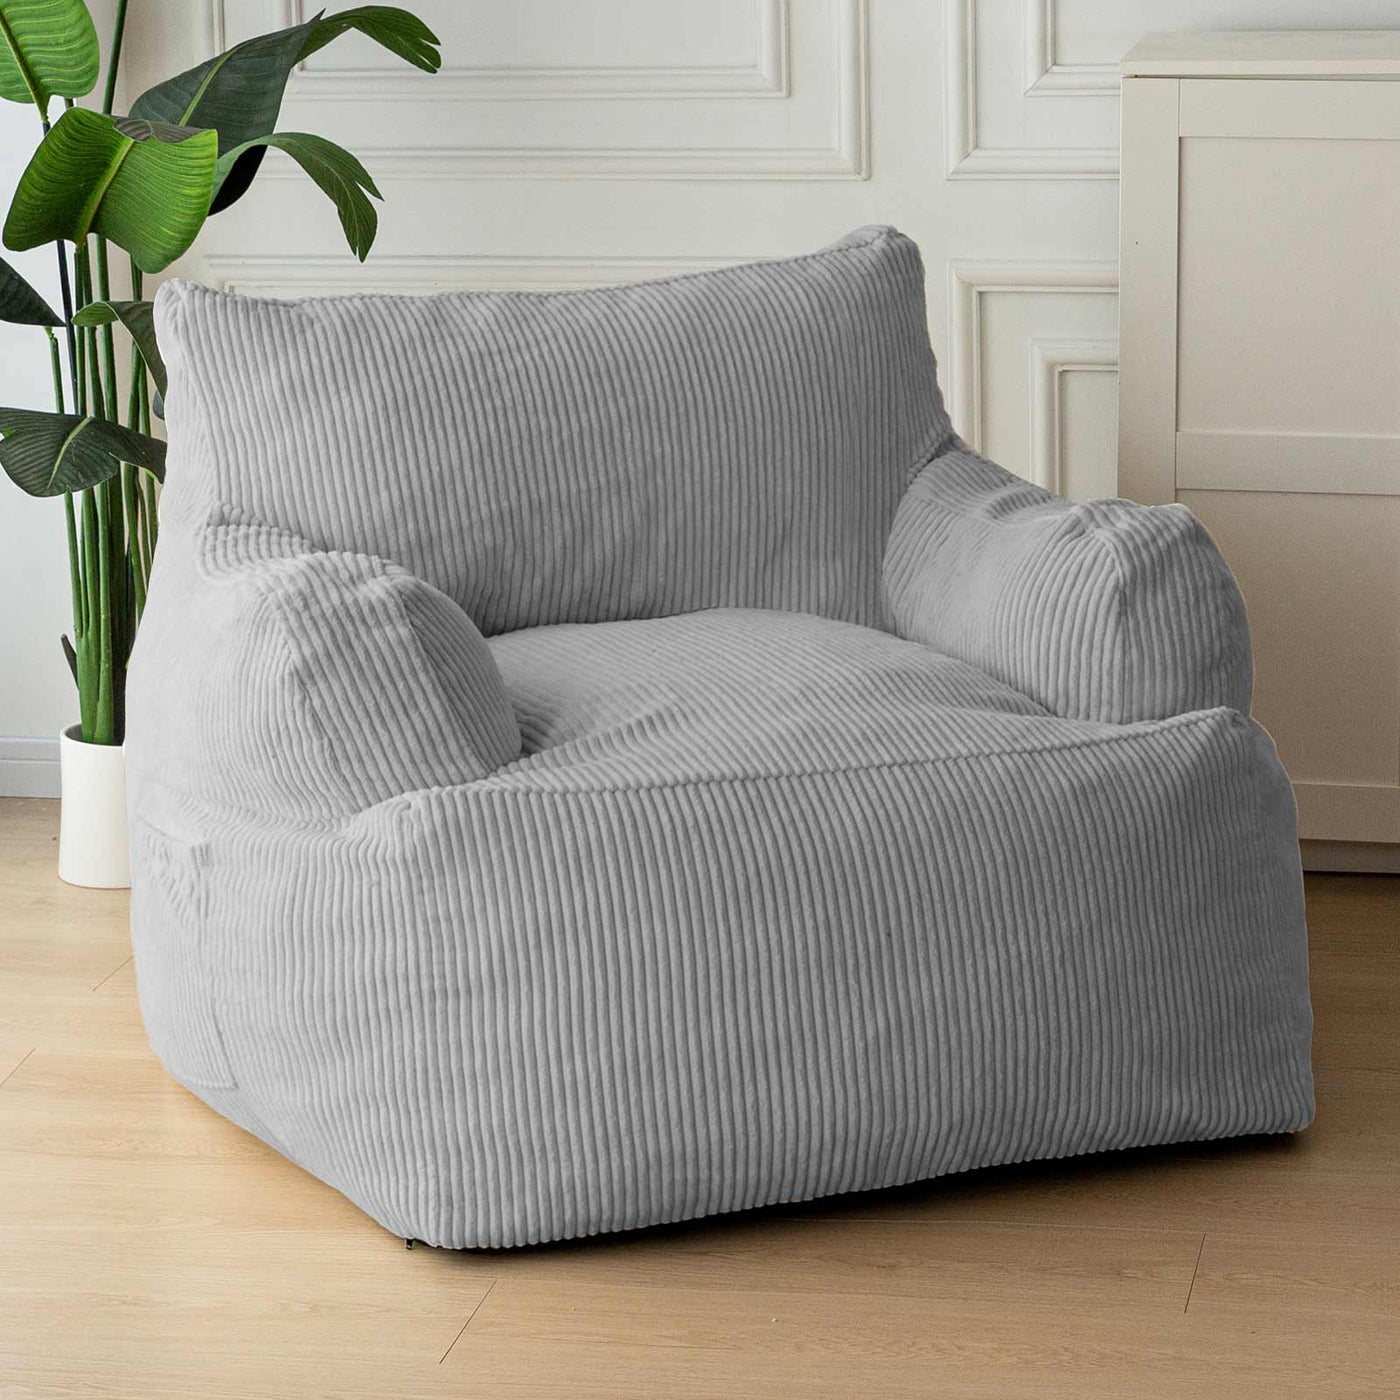 MAXYOYO Giant Bean Bag Chair, Stuffed Bean Bag Couch for Living Room, Grey